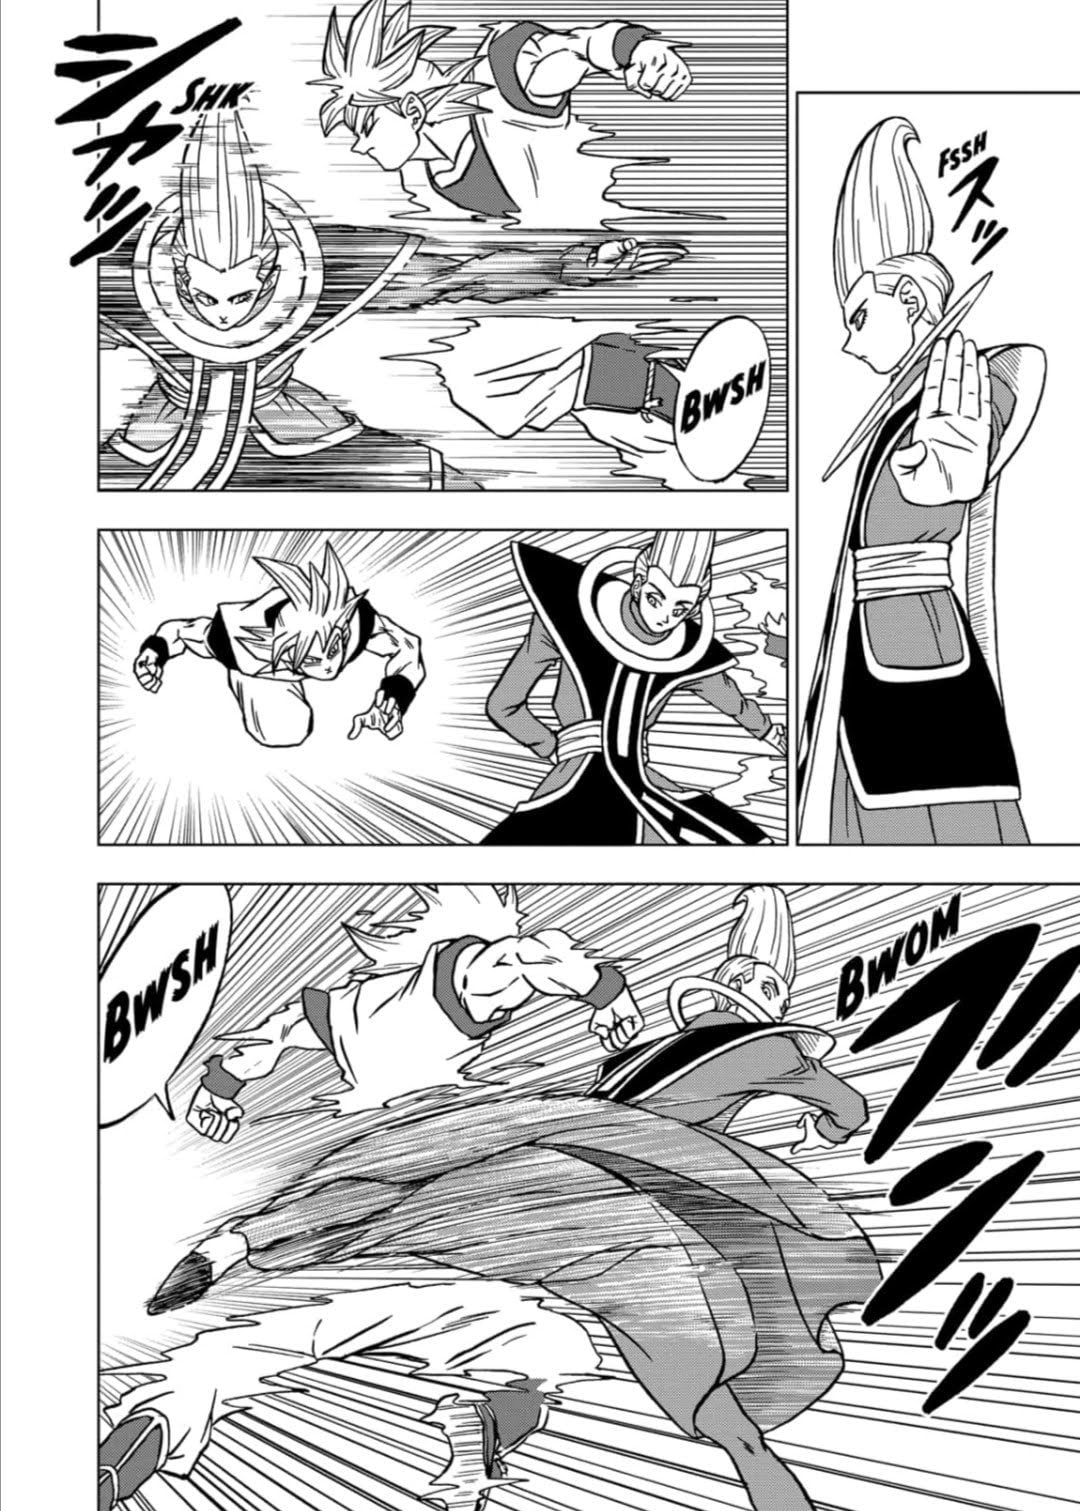 Dragon Ball Super, manga 68 en español: Vegeta superaría el ultra instinto  de Gokú gracias a Bills, VER manga 68 Dragon Ball Super en Espanol GRATIS, Akira Toriyama, TRENDS